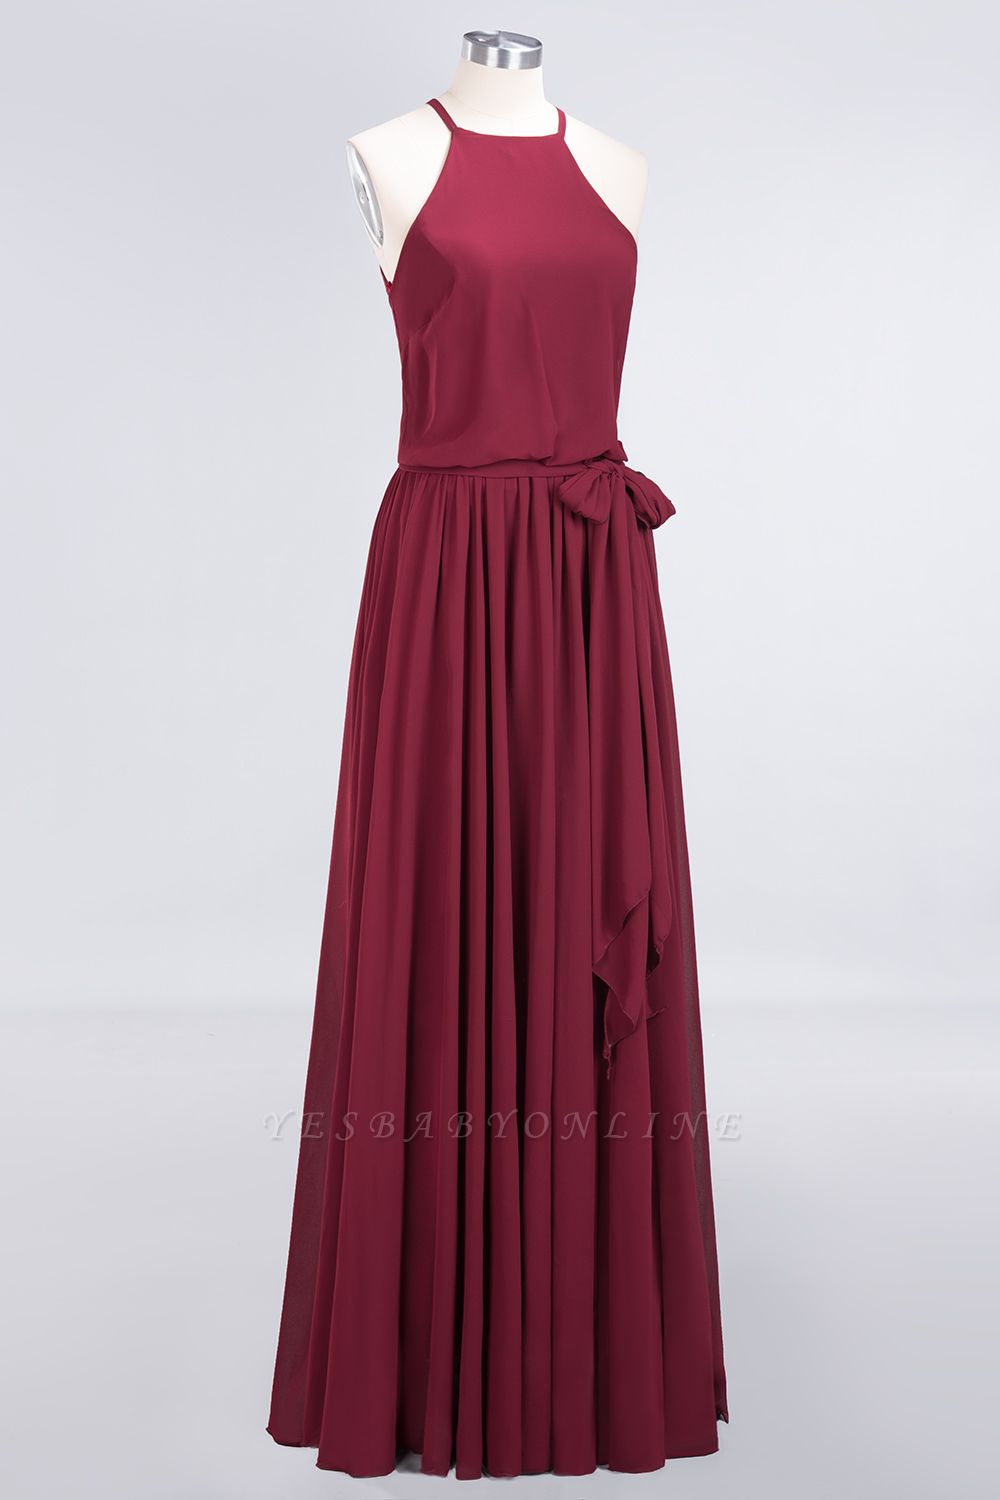 Chiffon A-Line Burgundy Simple Cheap Bridesmaid Dress | Yesbabyonline.com